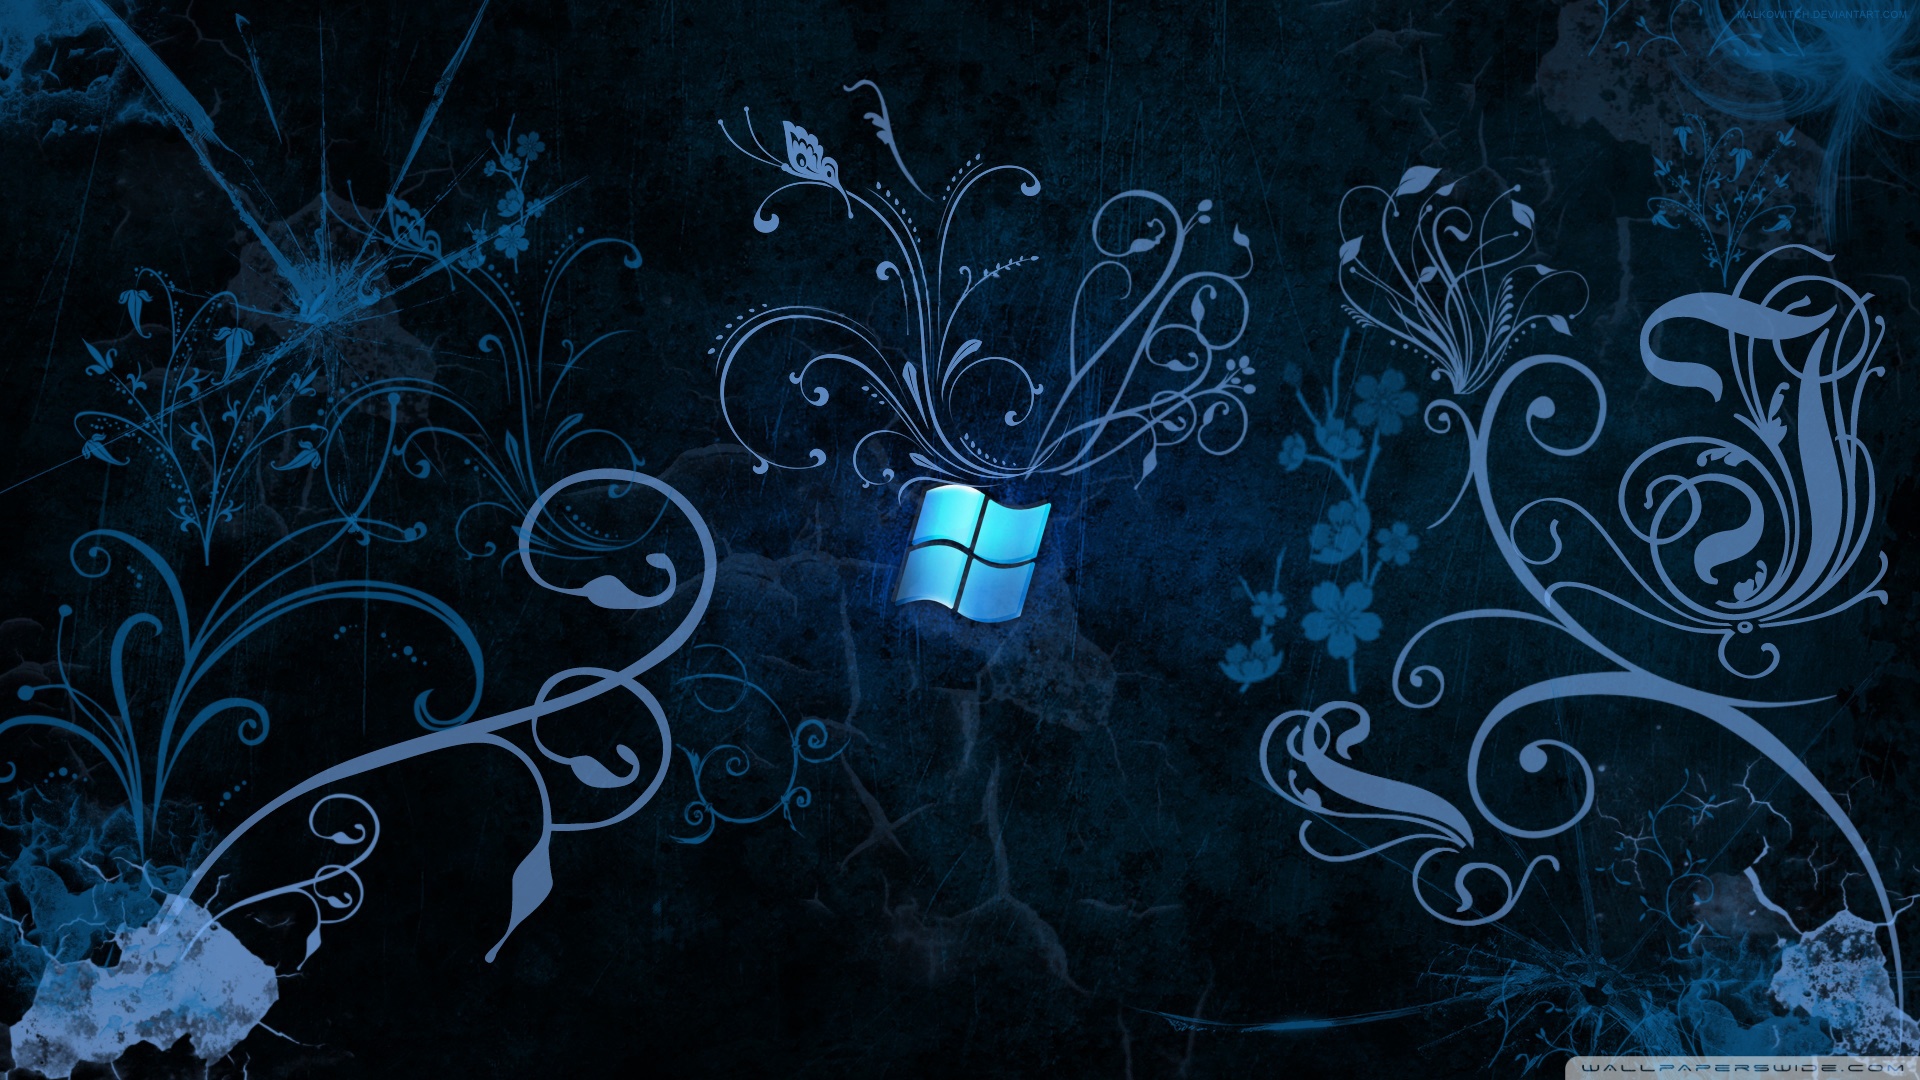  2013Computers   Windows 8 Windows 8 dark wallpaper 042092 jpg 1920x1080